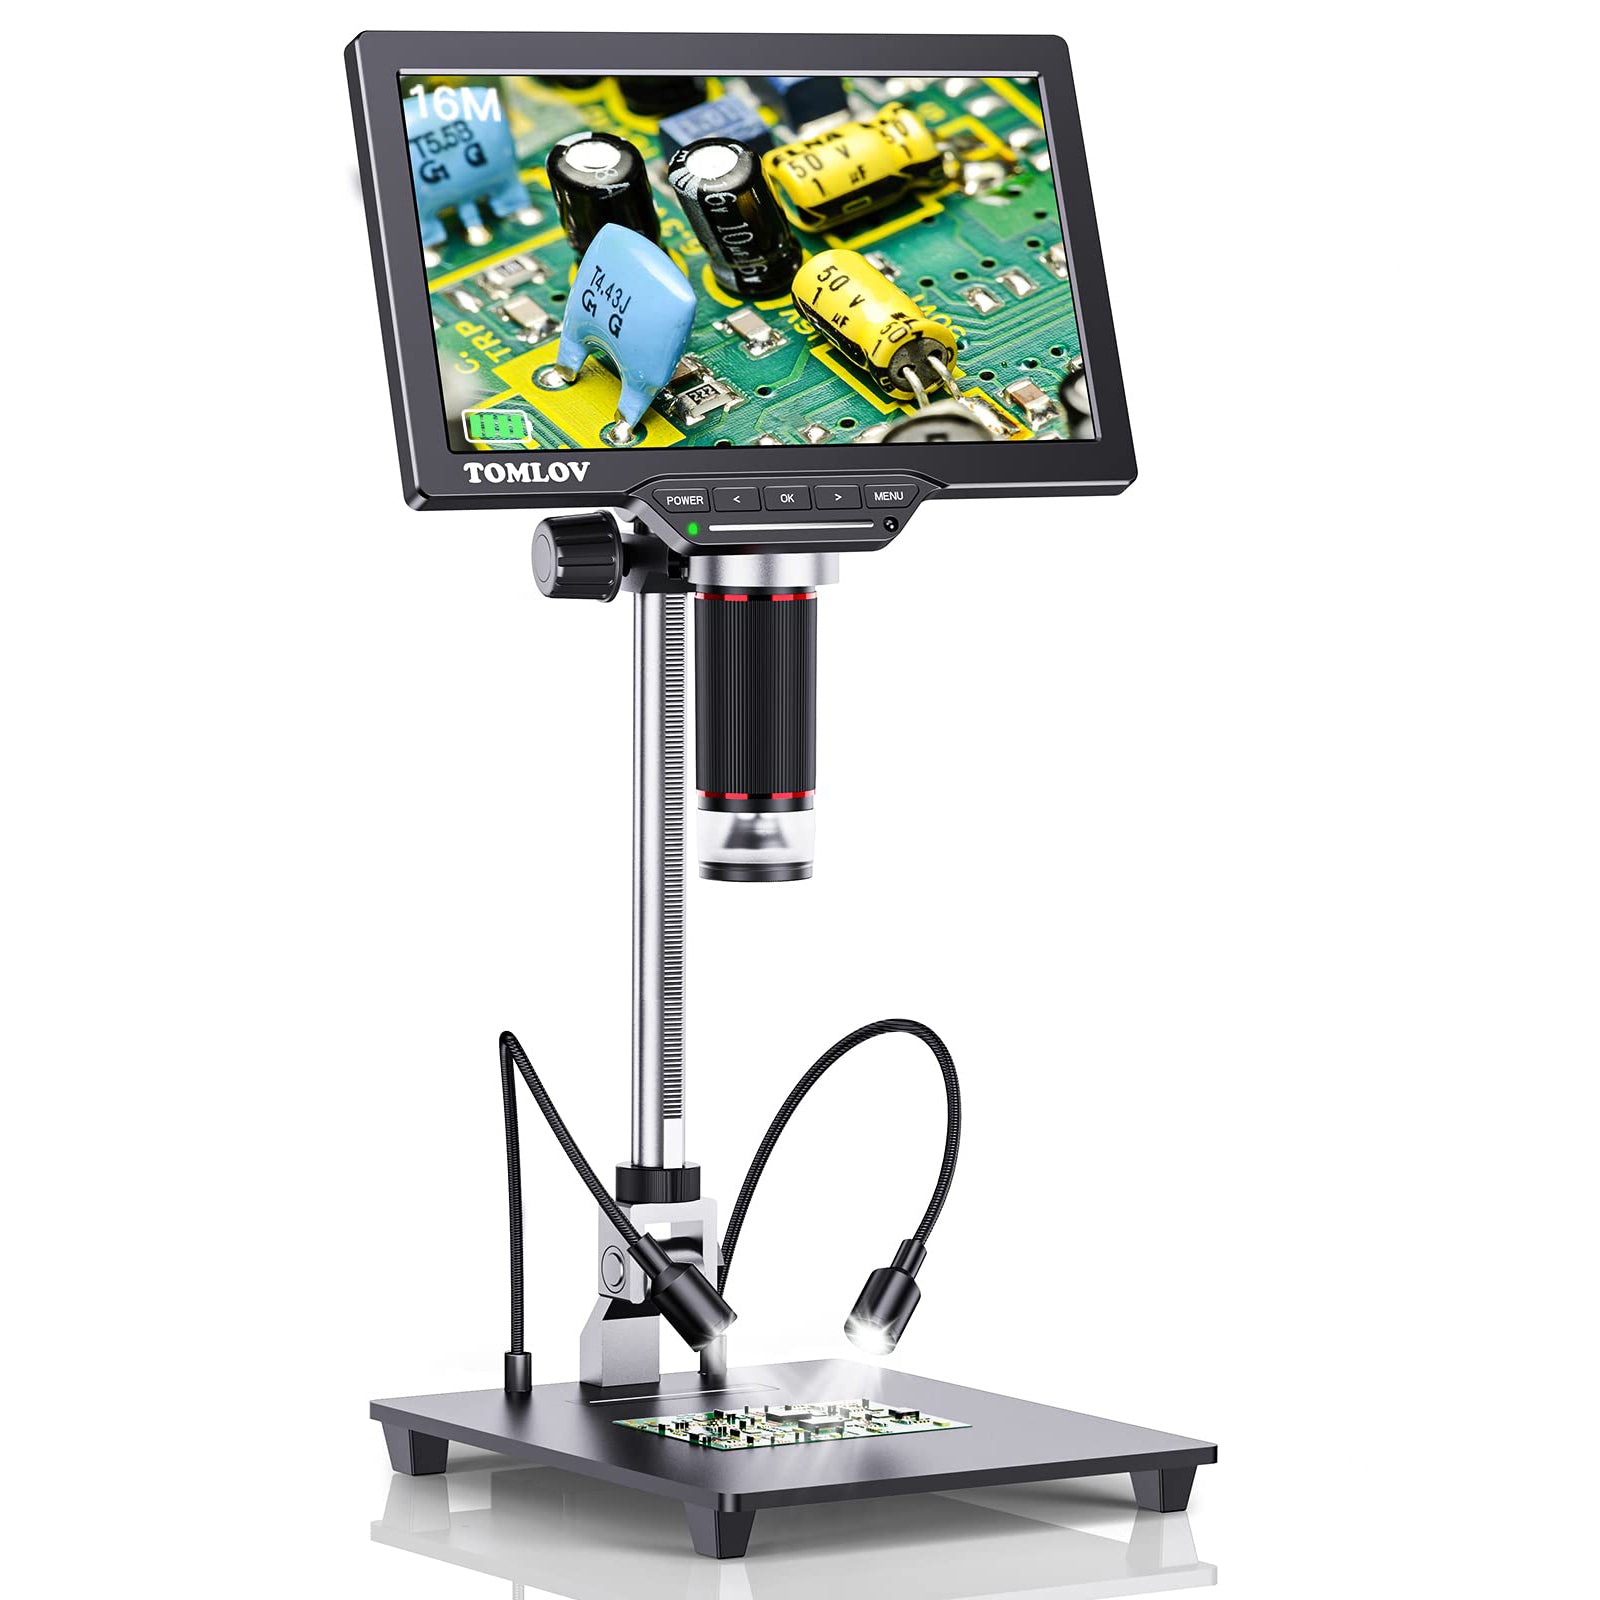 TOMLOV DM201 Pro Digital Mikroskop HDMI LCD Mikroskop 